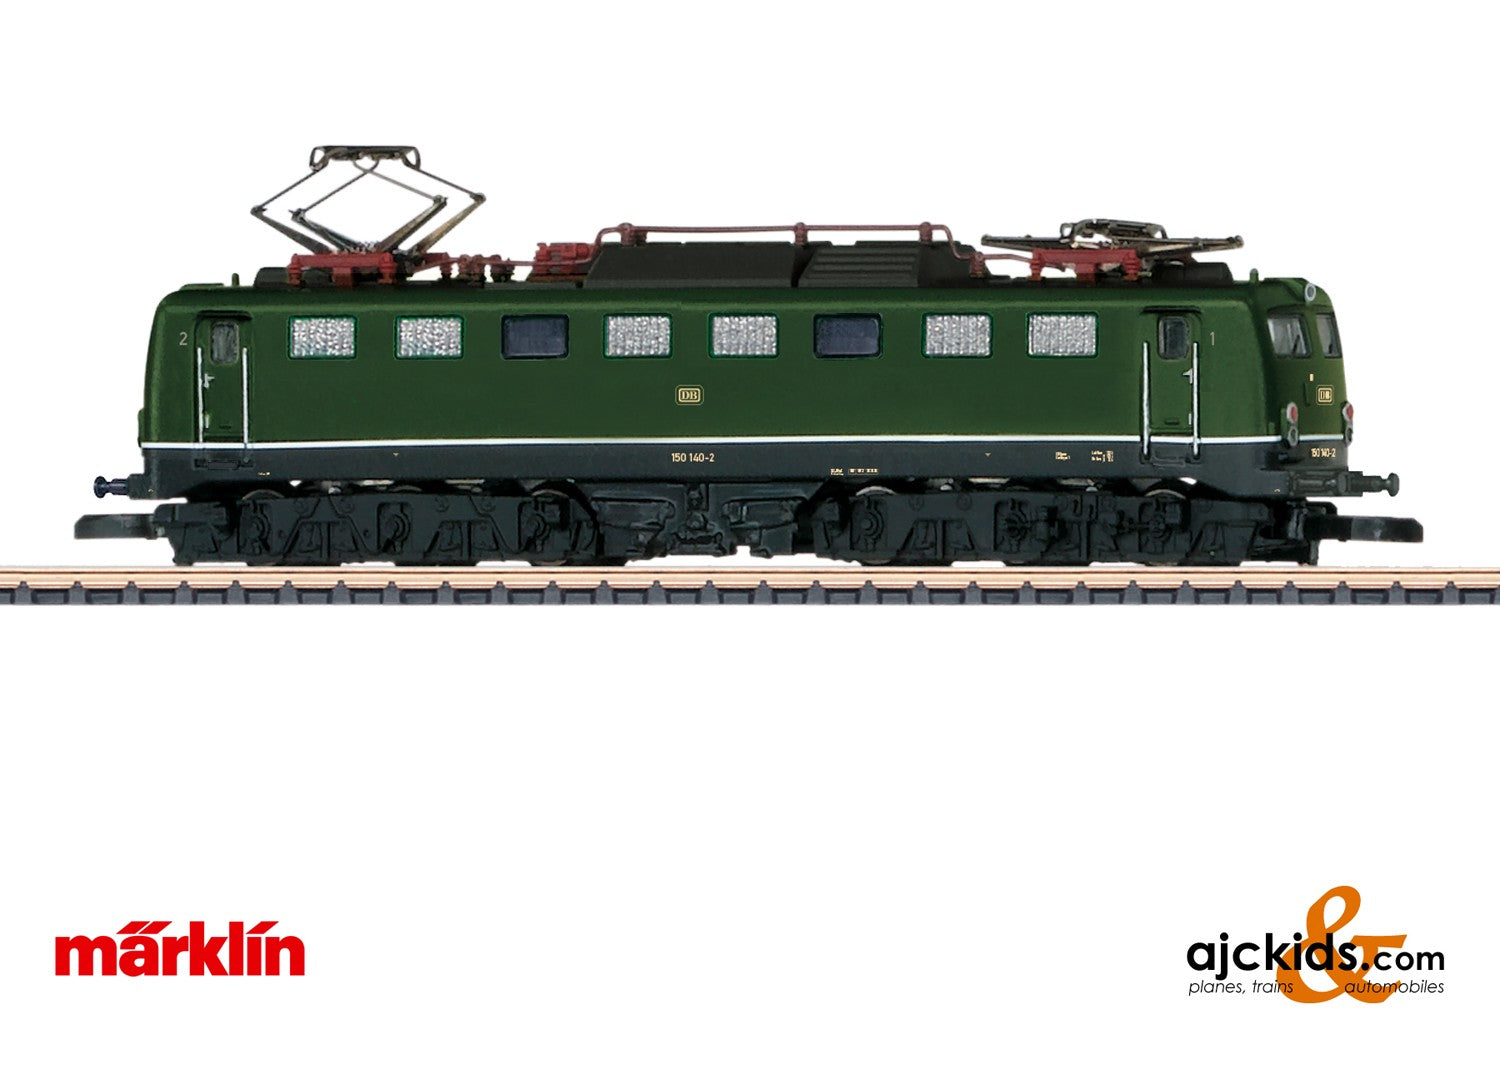 Marklin 88579 - Class 150 Electric Locomotive, EAN 4001883885797 at Ajckids.com